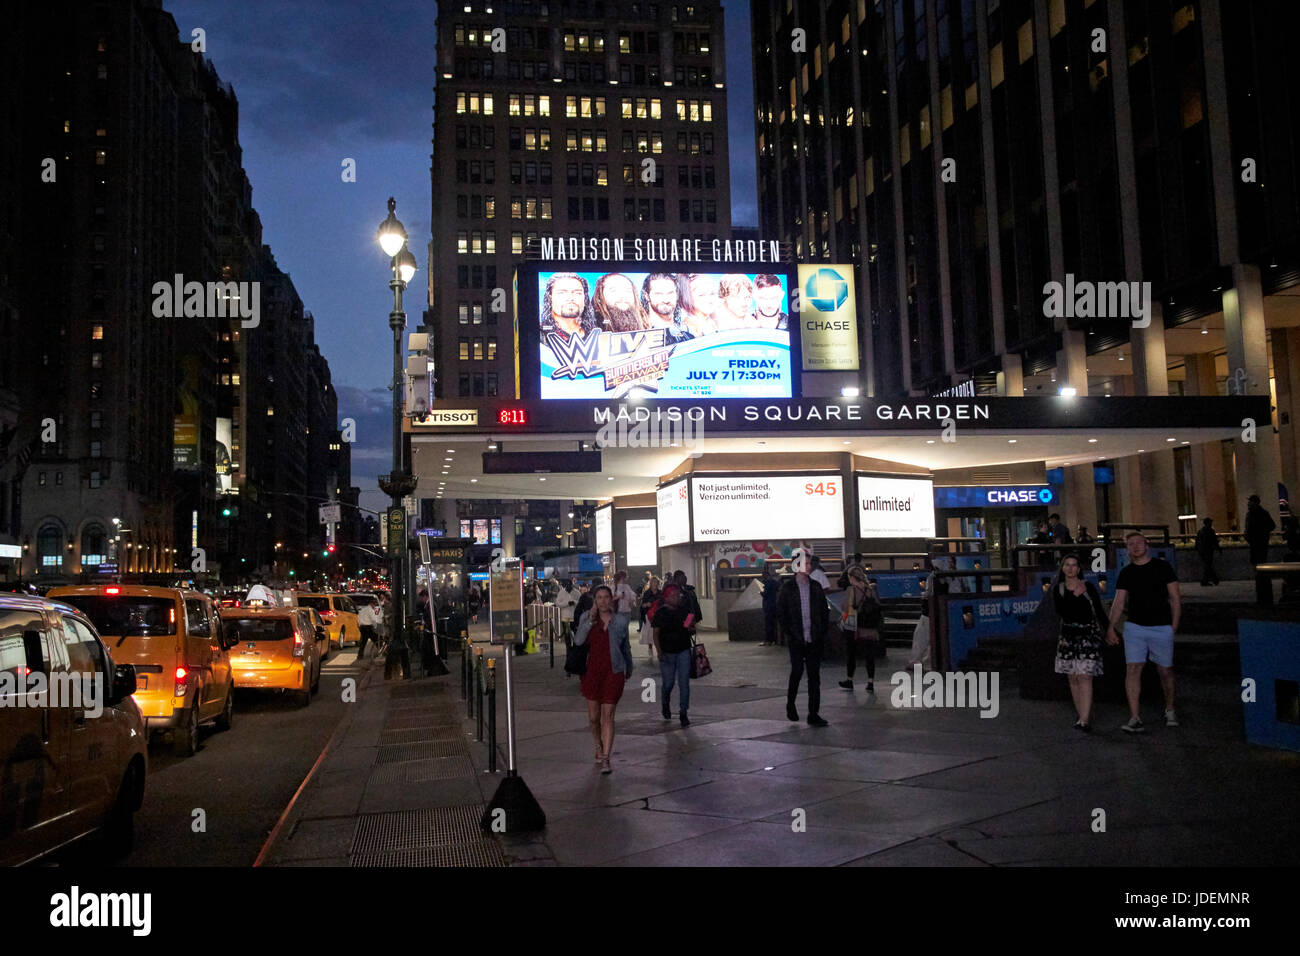 Lobby of Madison Square Garden Stock Photo - Alamy